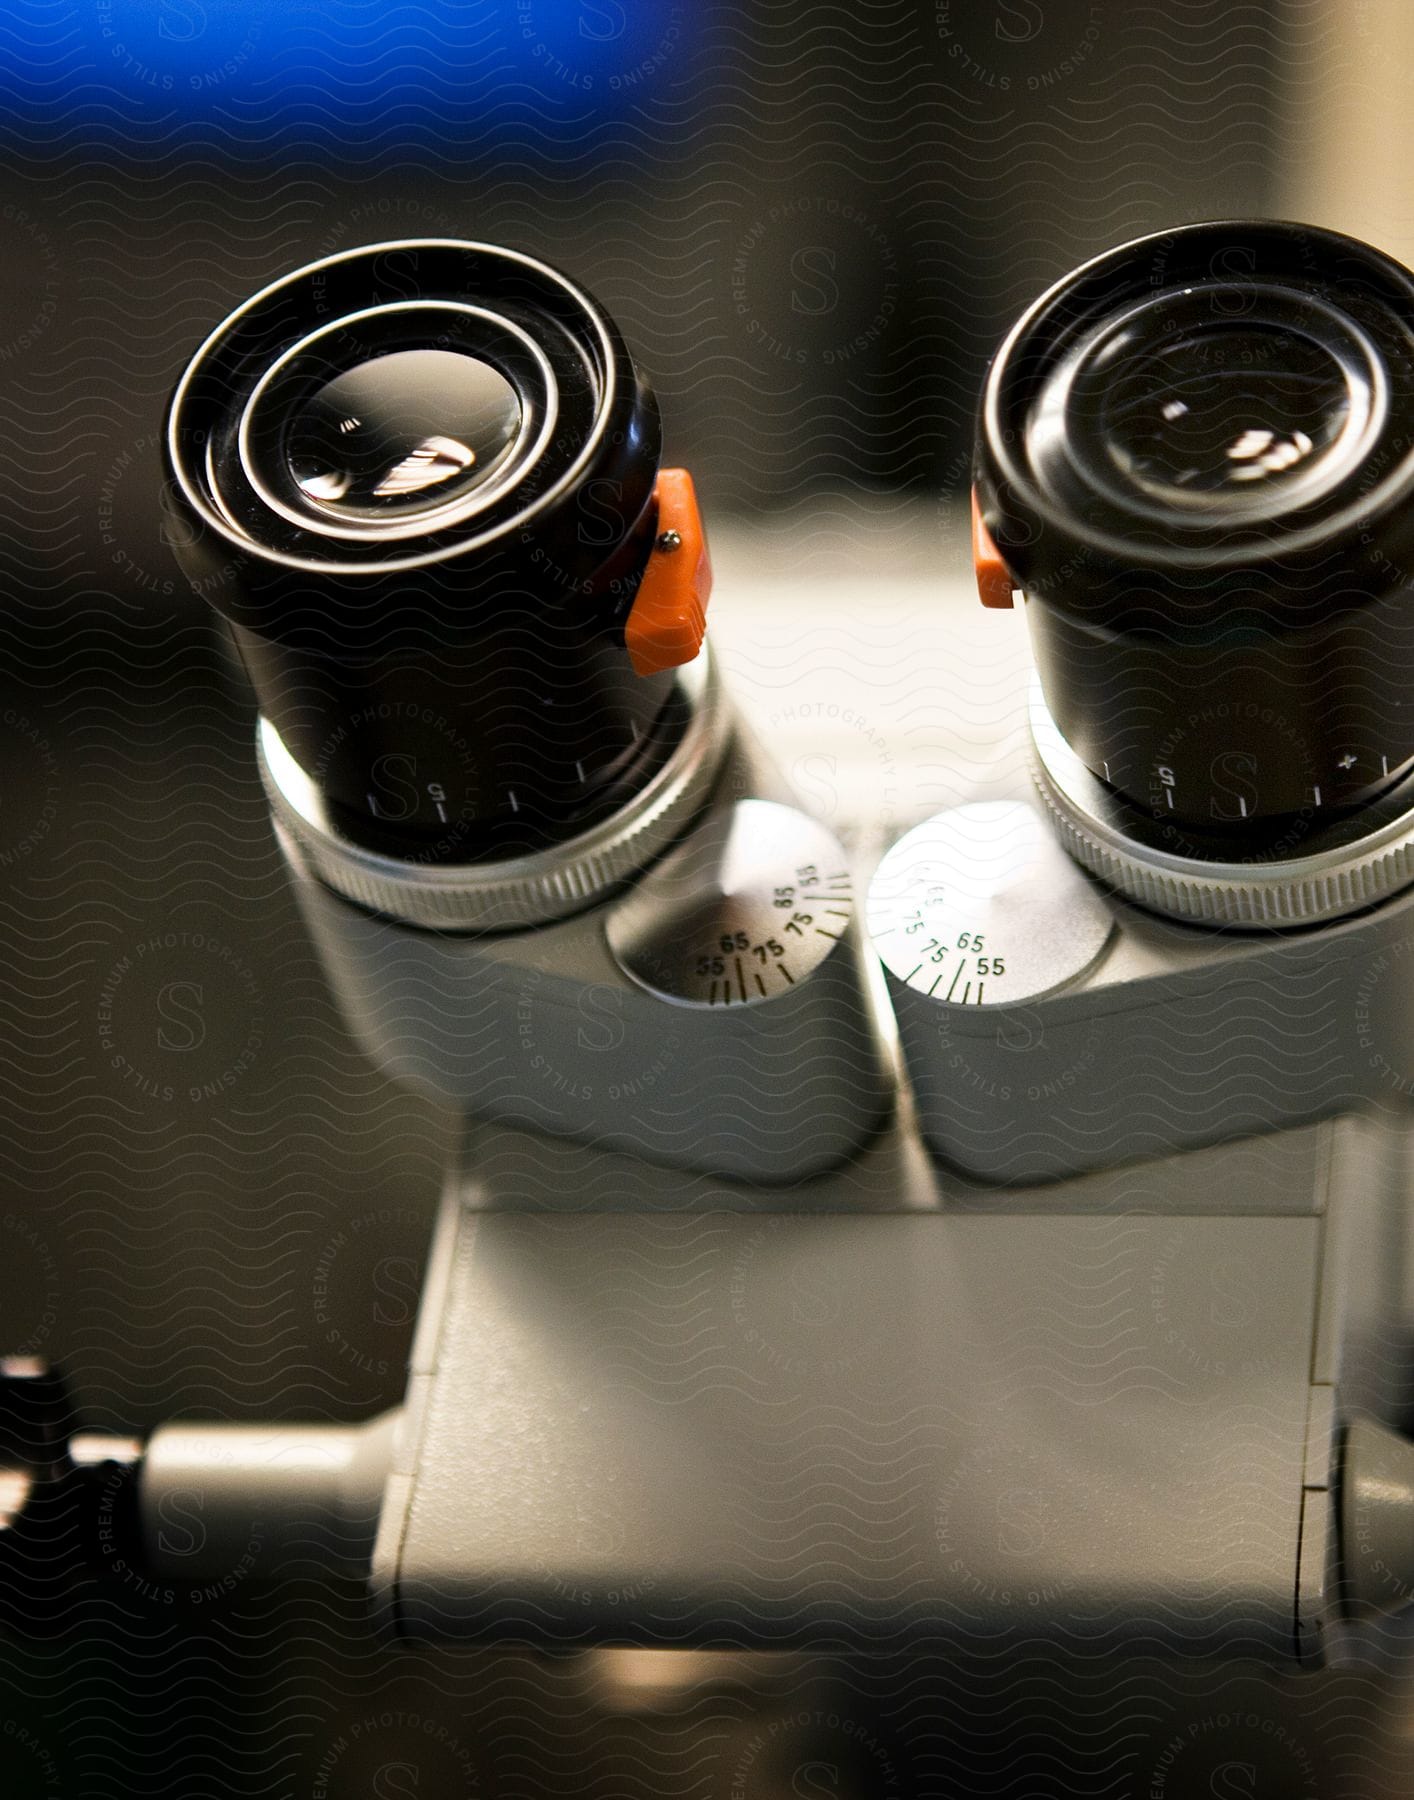 Microscope lens resembling binoculars